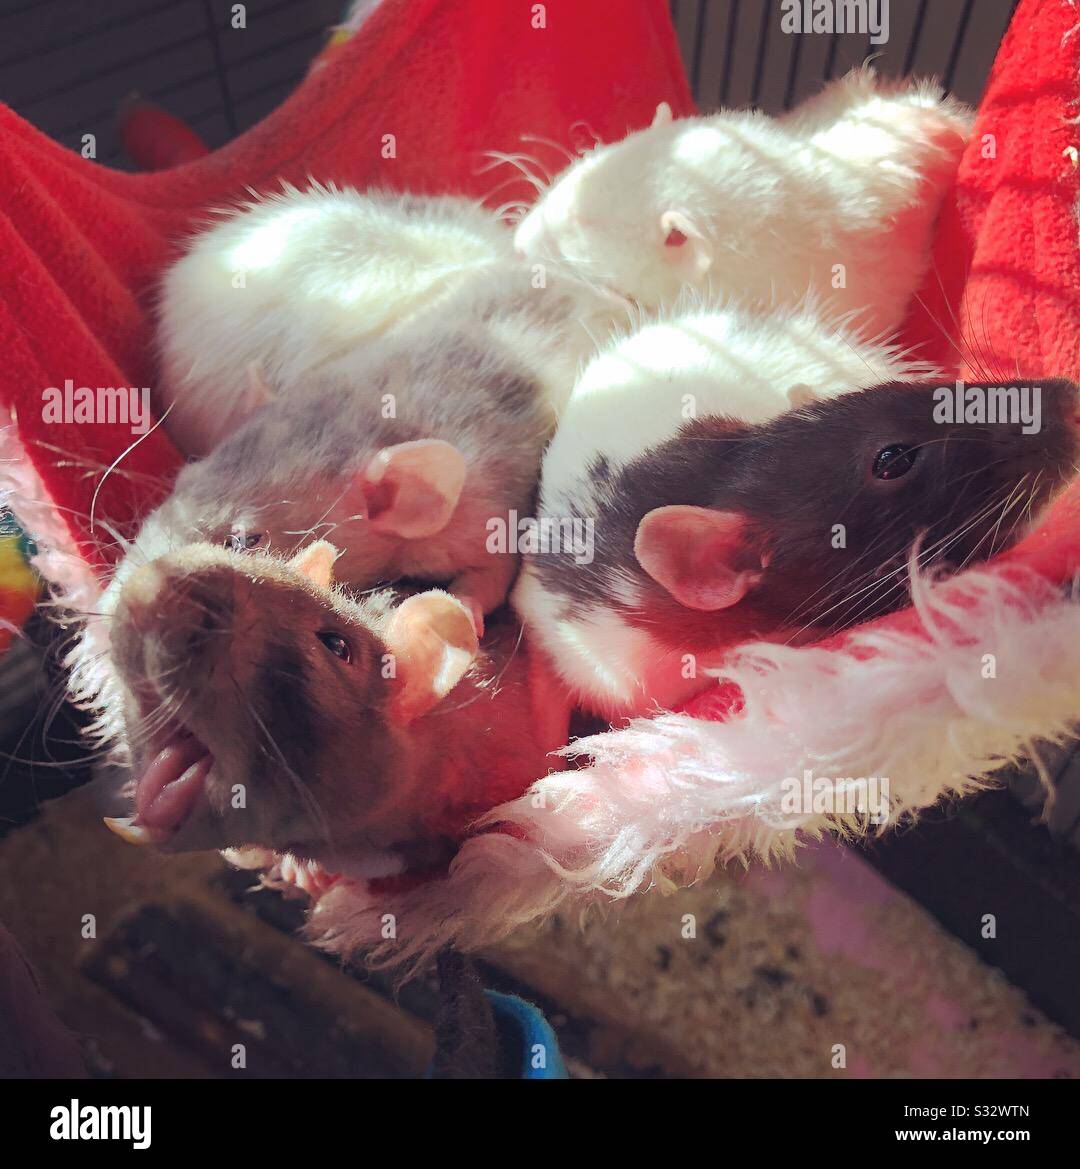 Pet rats yawn Stock Photo